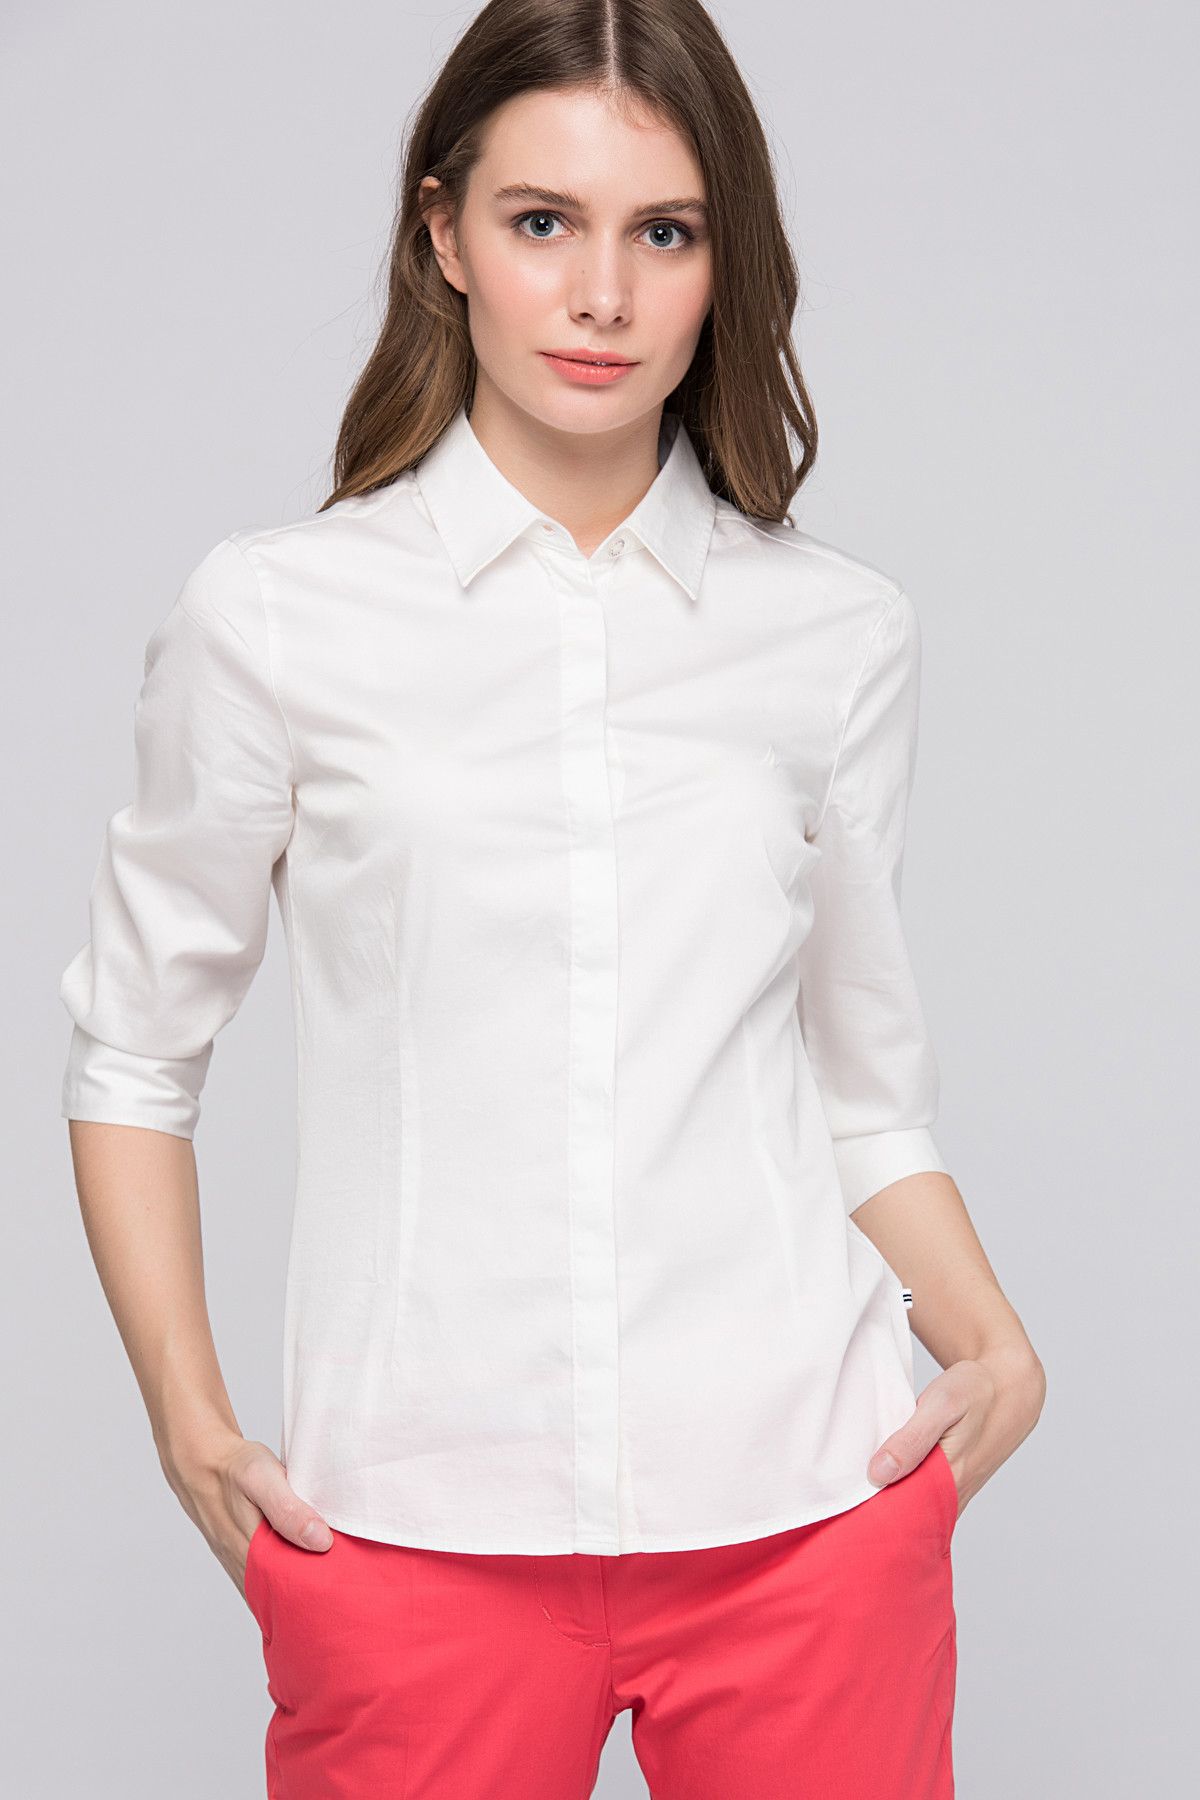 Nautica Kadın Beyaz Gömlek 519W007T